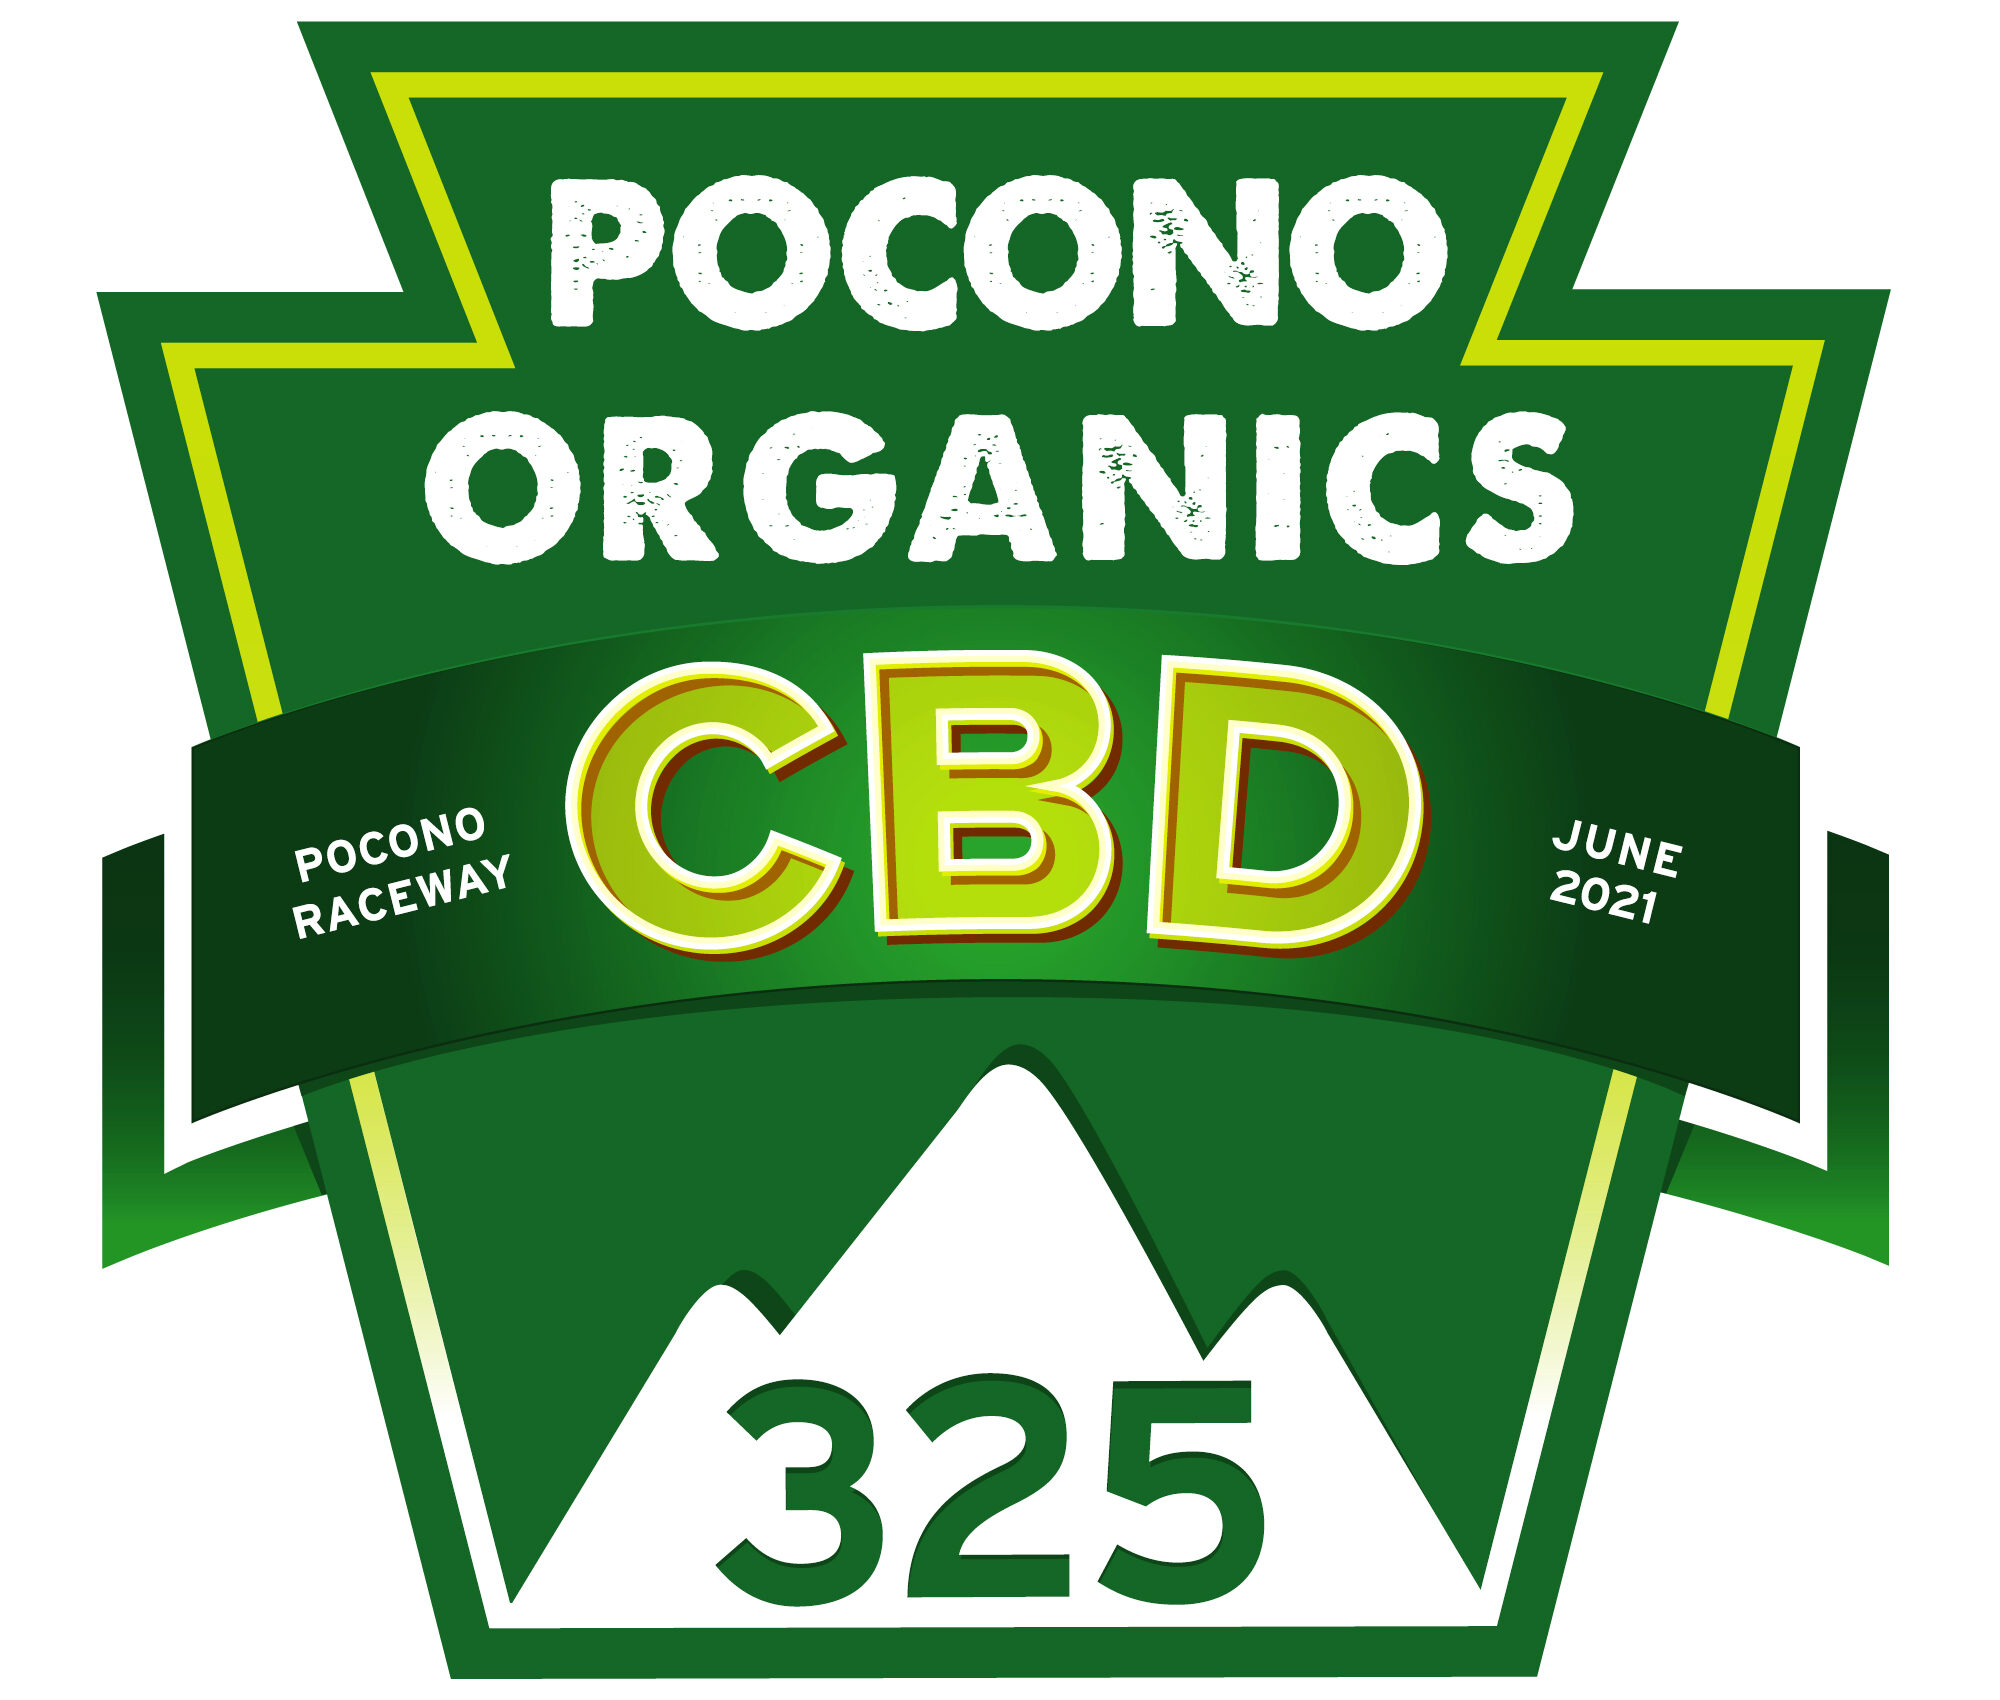 Pocono Organics CBD Announced As Sponsor For NASCAR Cup Series at Pocono on Saturday, June 26